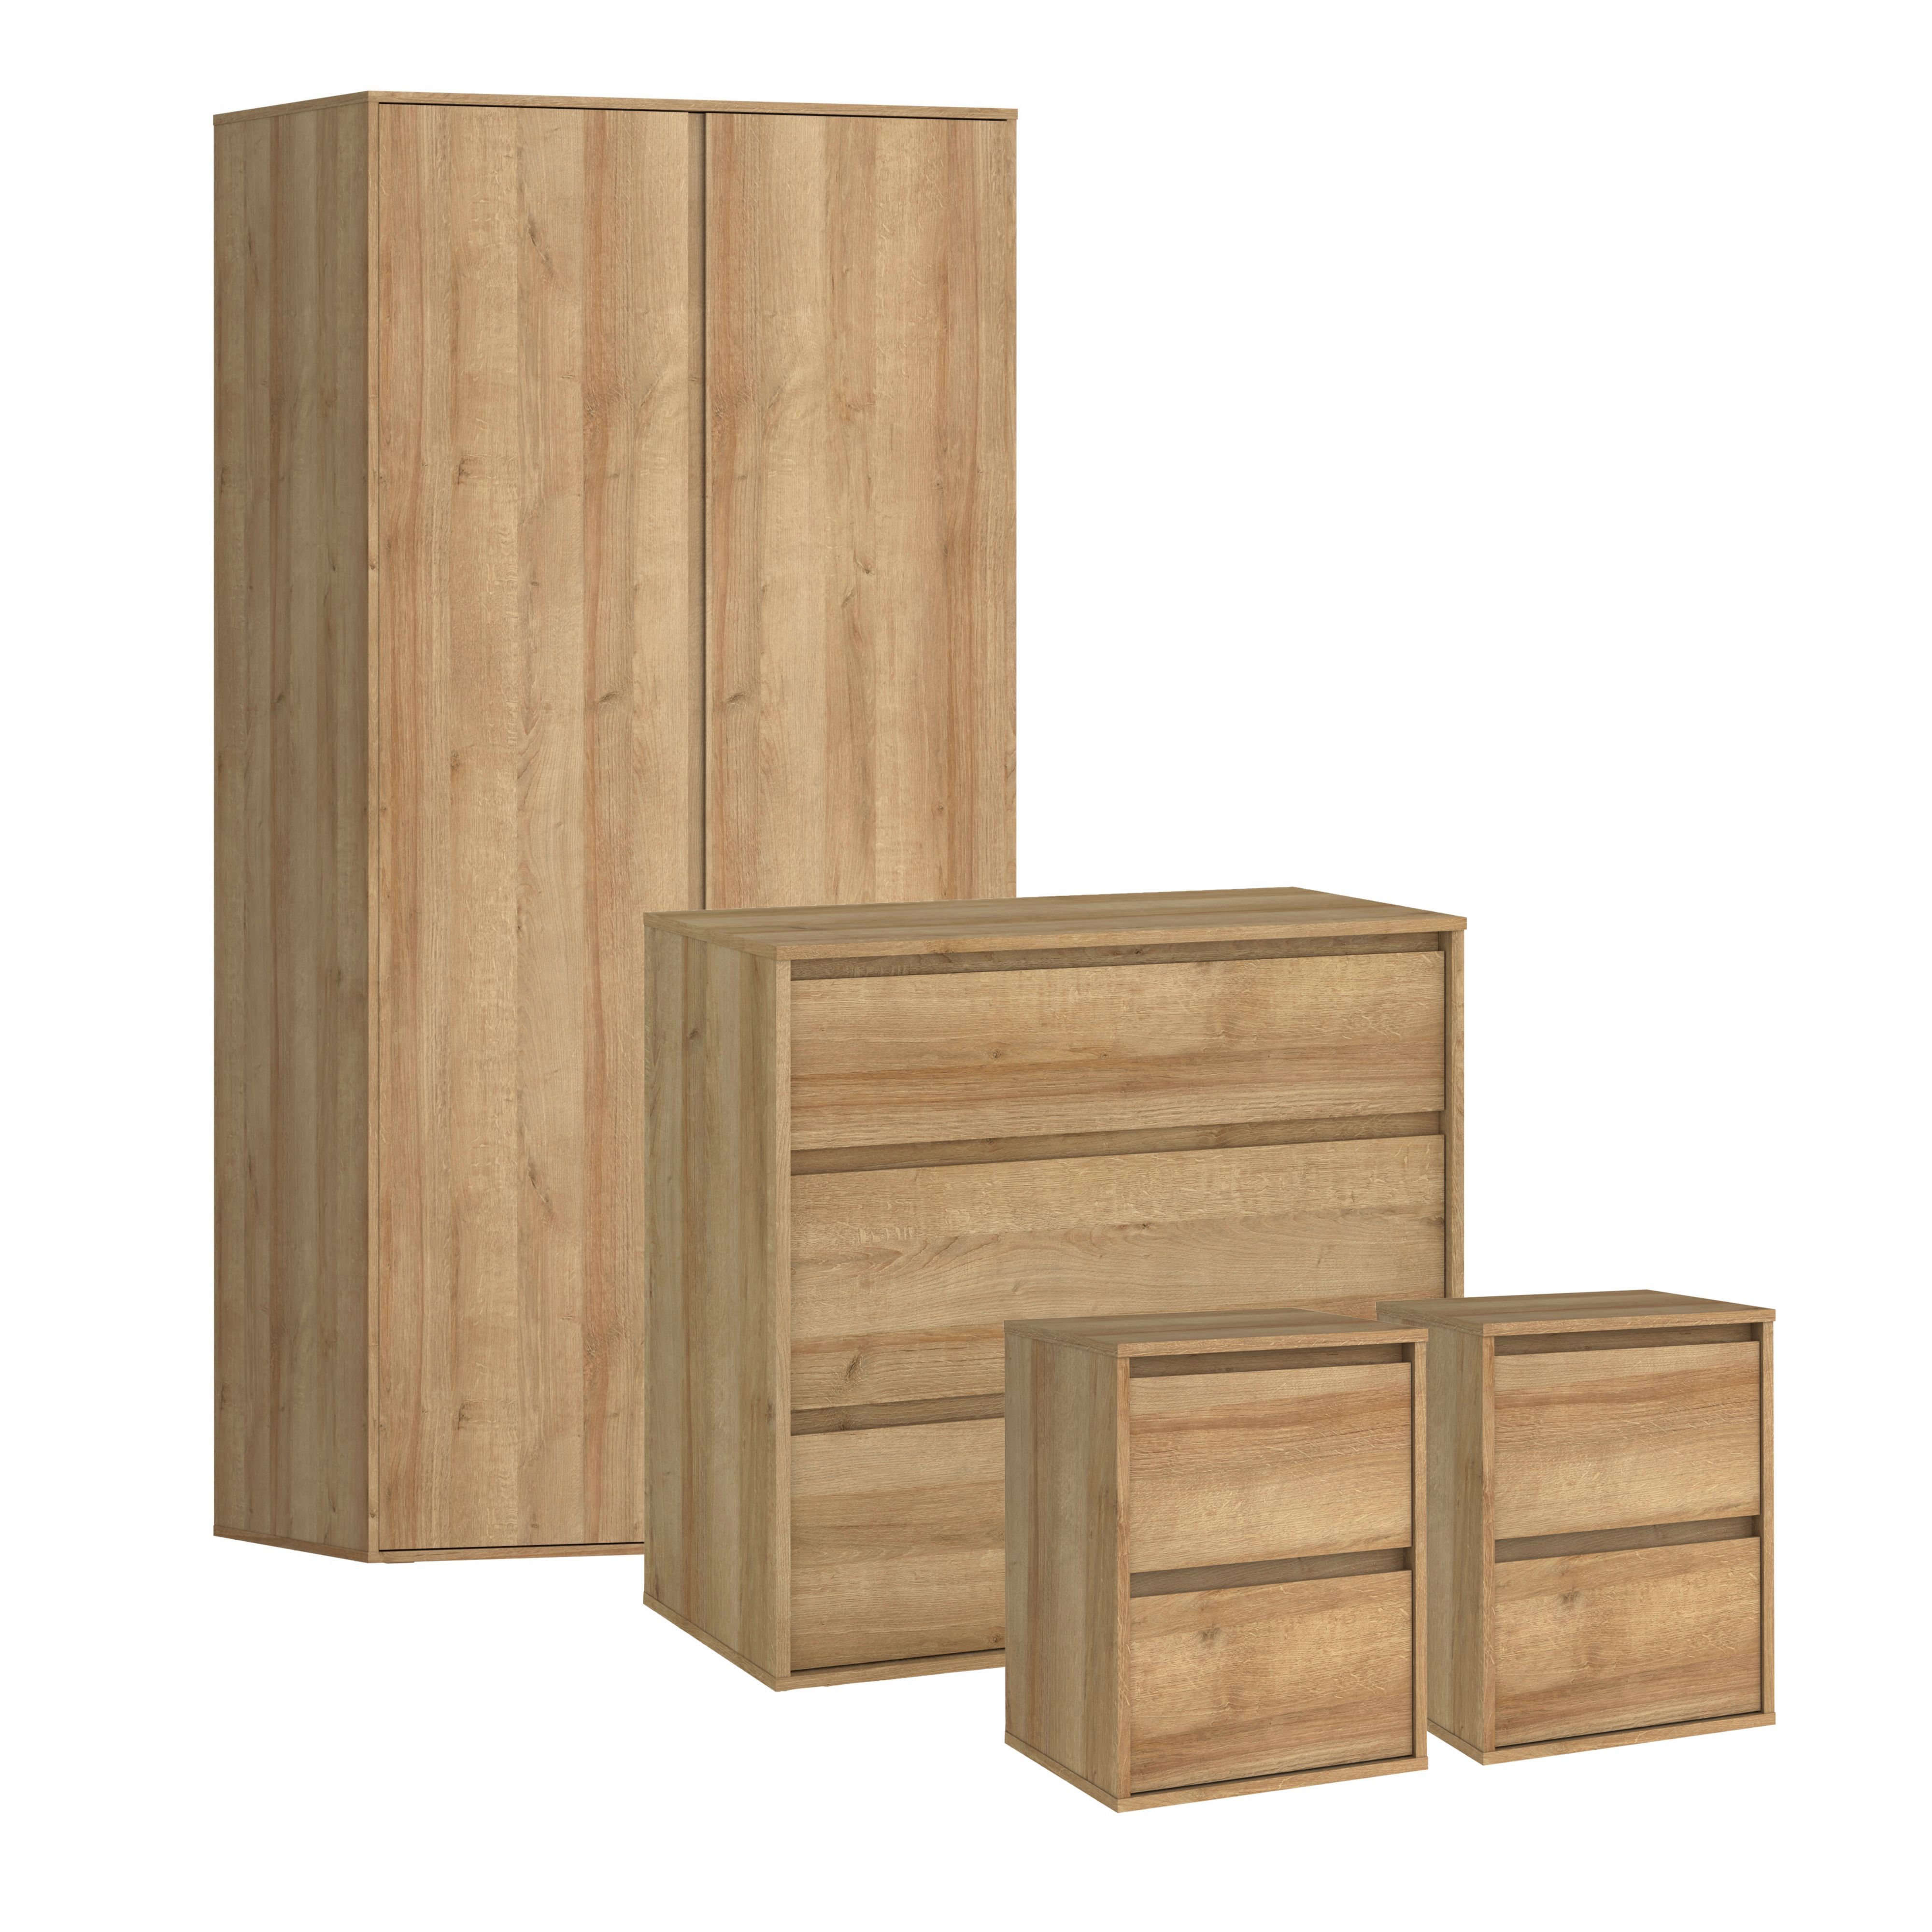 Pattinson Oak effect Bedroom furniture set